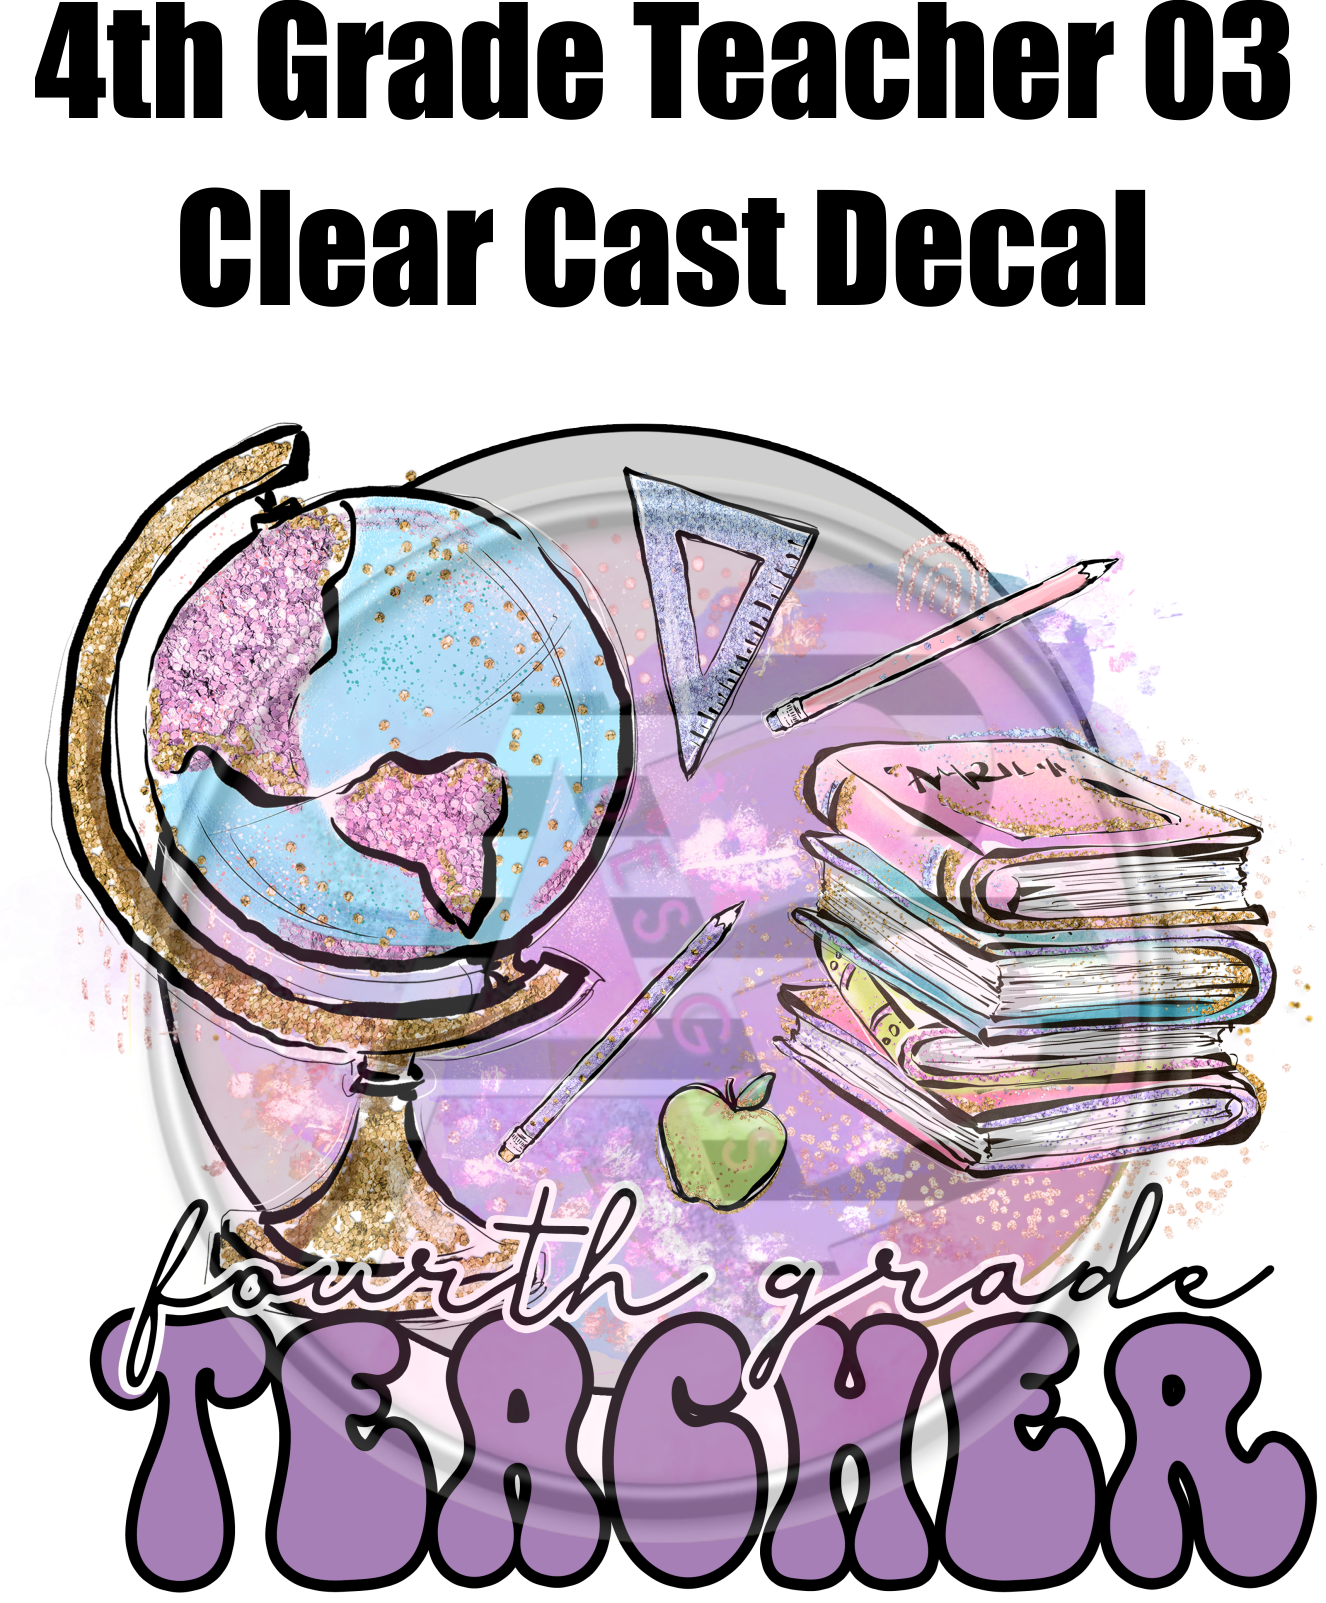 4th Grade Teacher 03 - Clear Cast Decal - 56